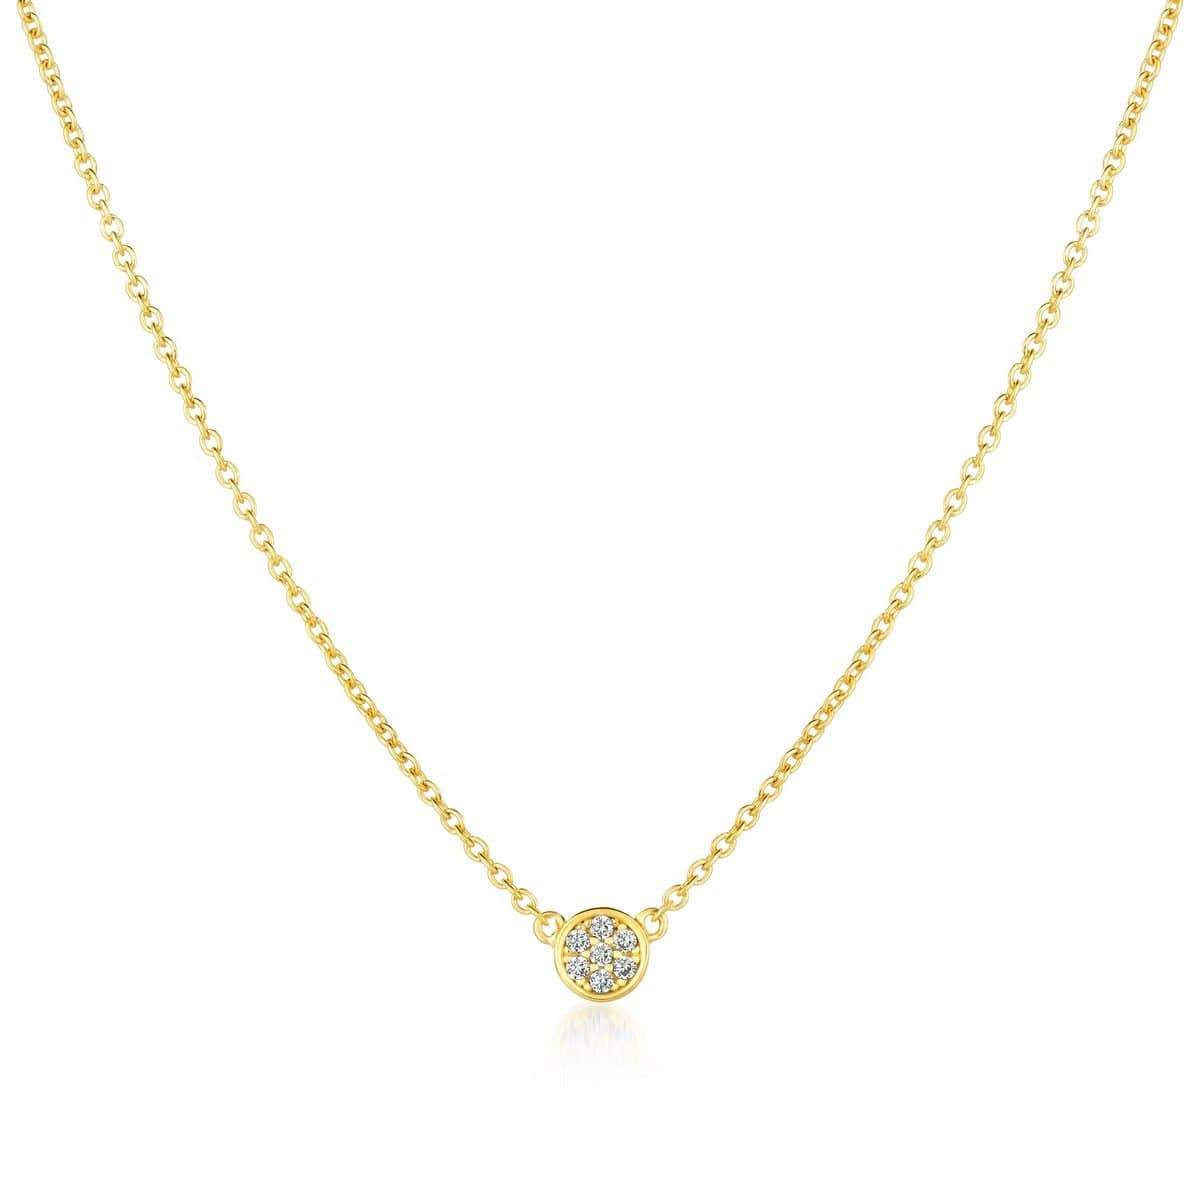 Crislu Jewelry CRISLU Single Sugar Drop Necklace finished in 18KT Gold